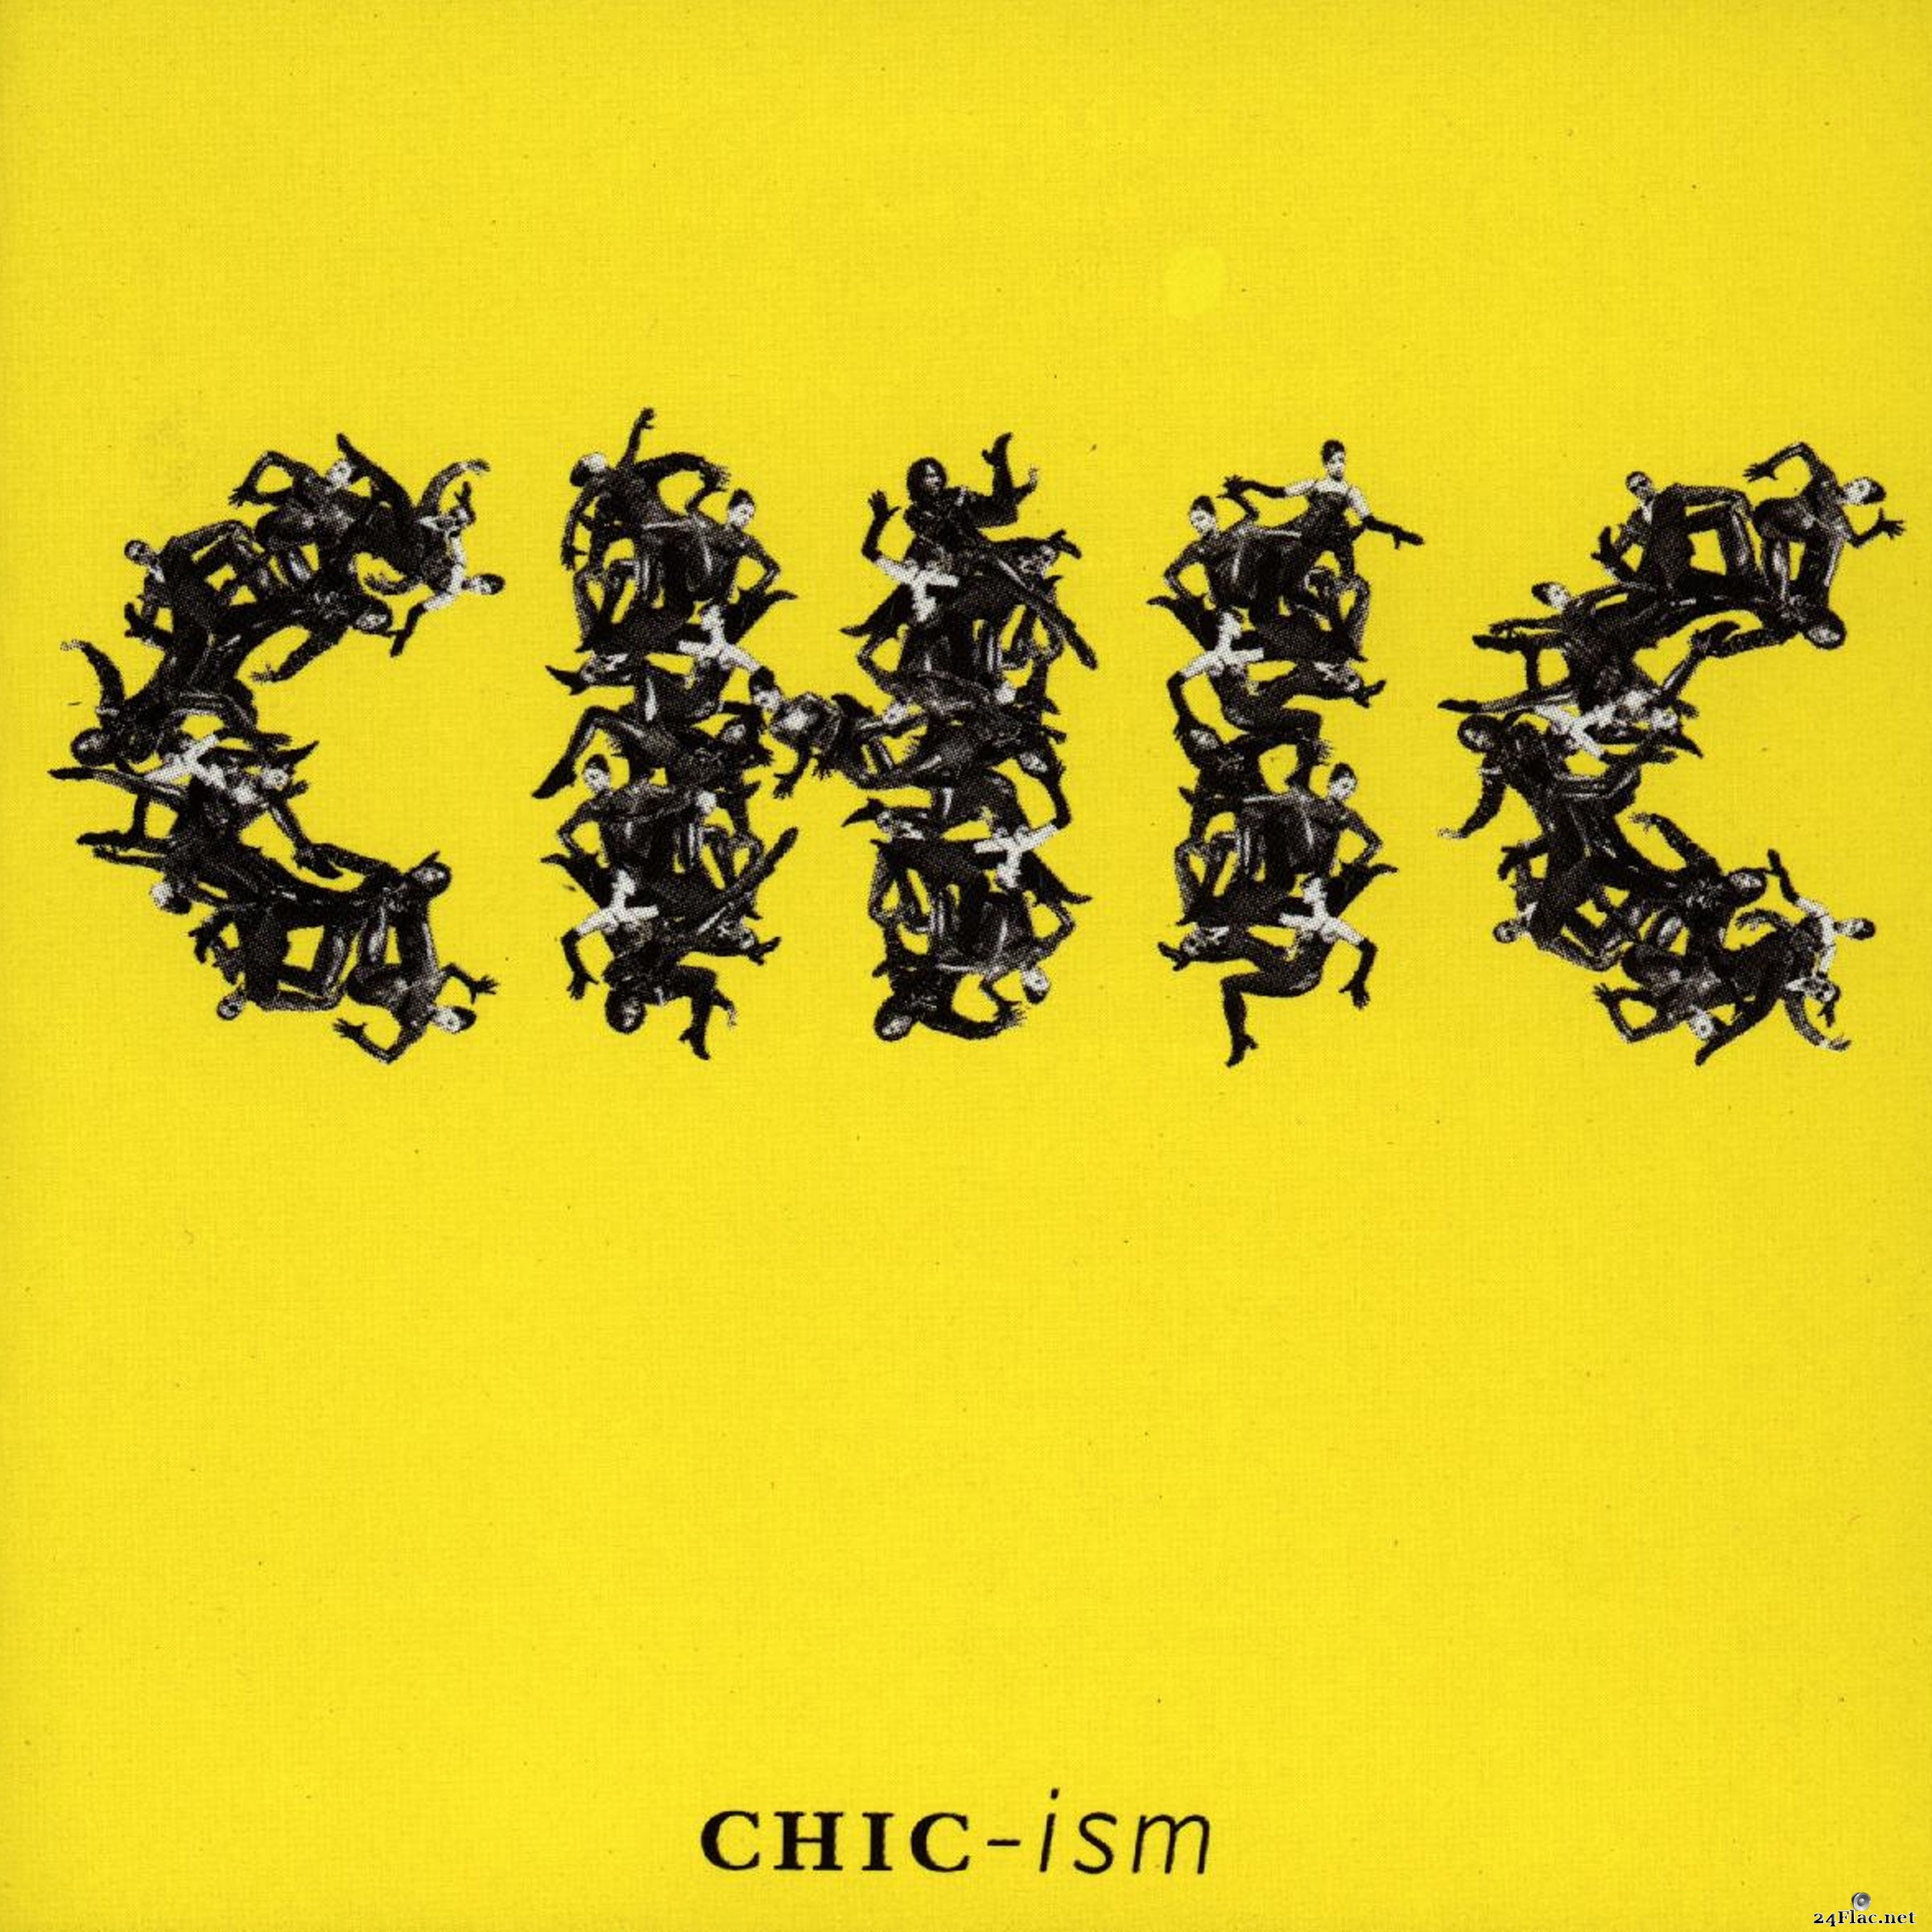 Chic - Chic-ism (2006) Hi-Res